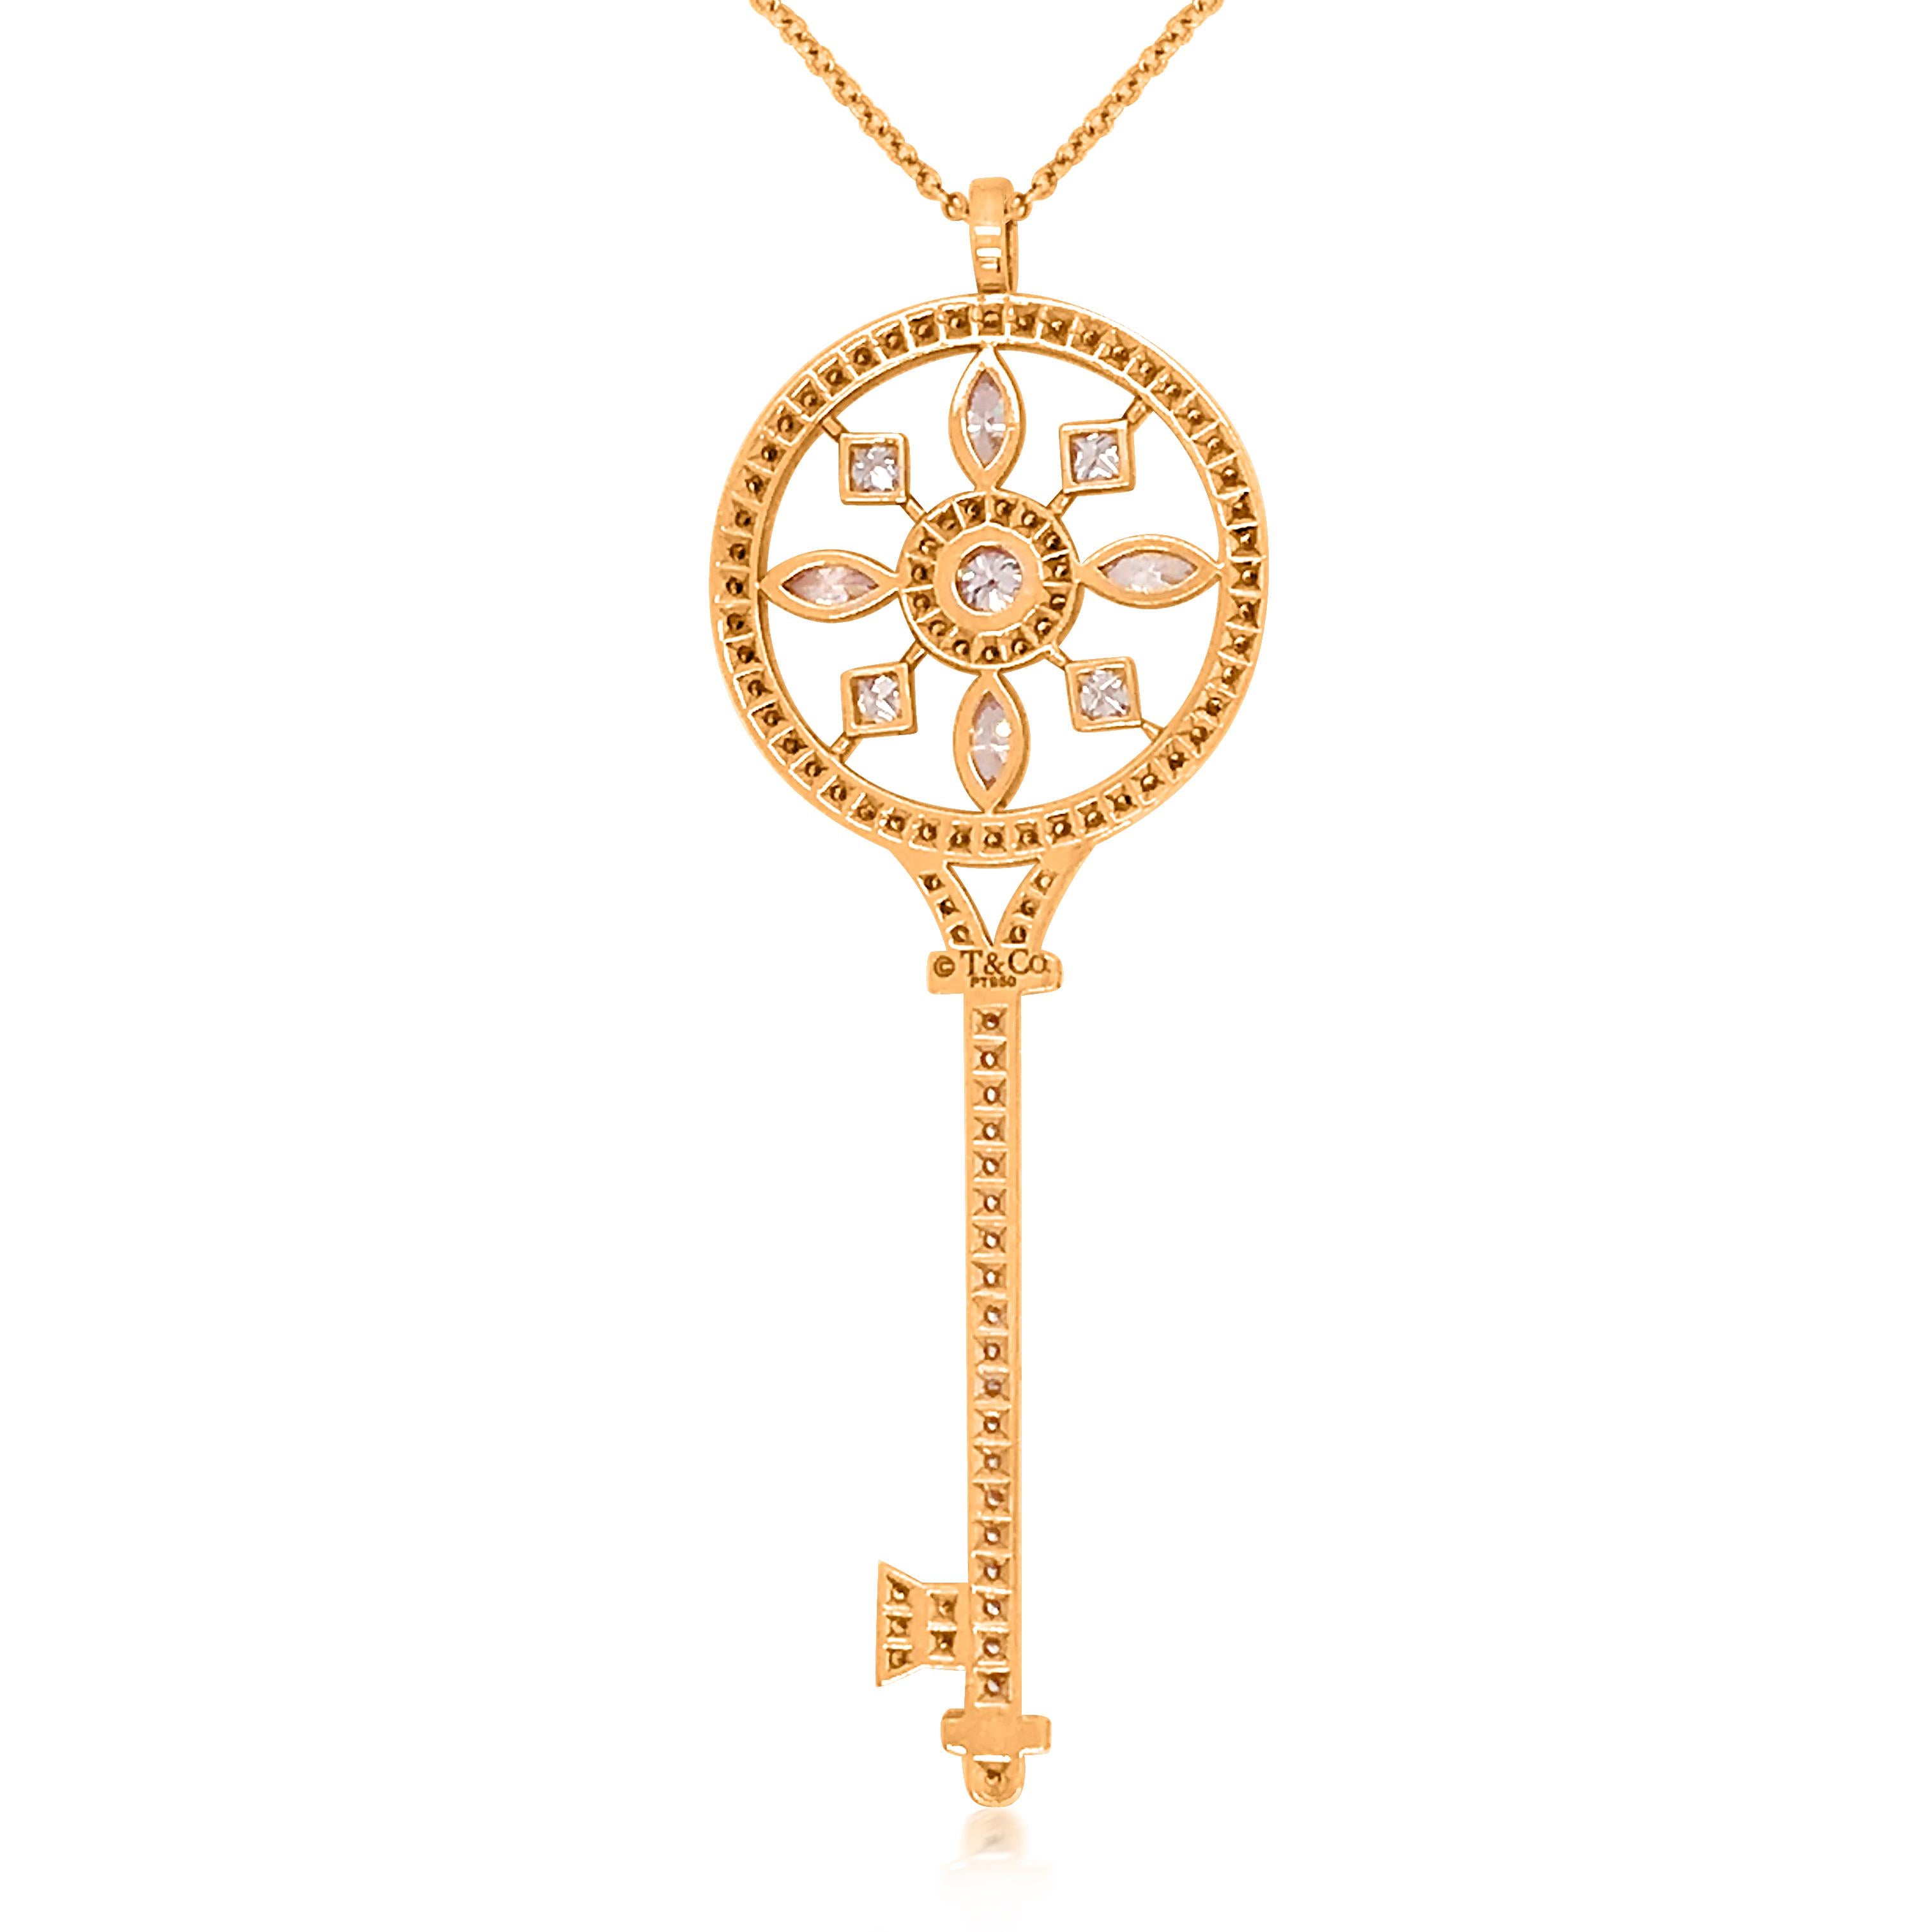 Modern Tiffany & Co. Key-Shaped Pendant with 18 Karat Gold, Diamond